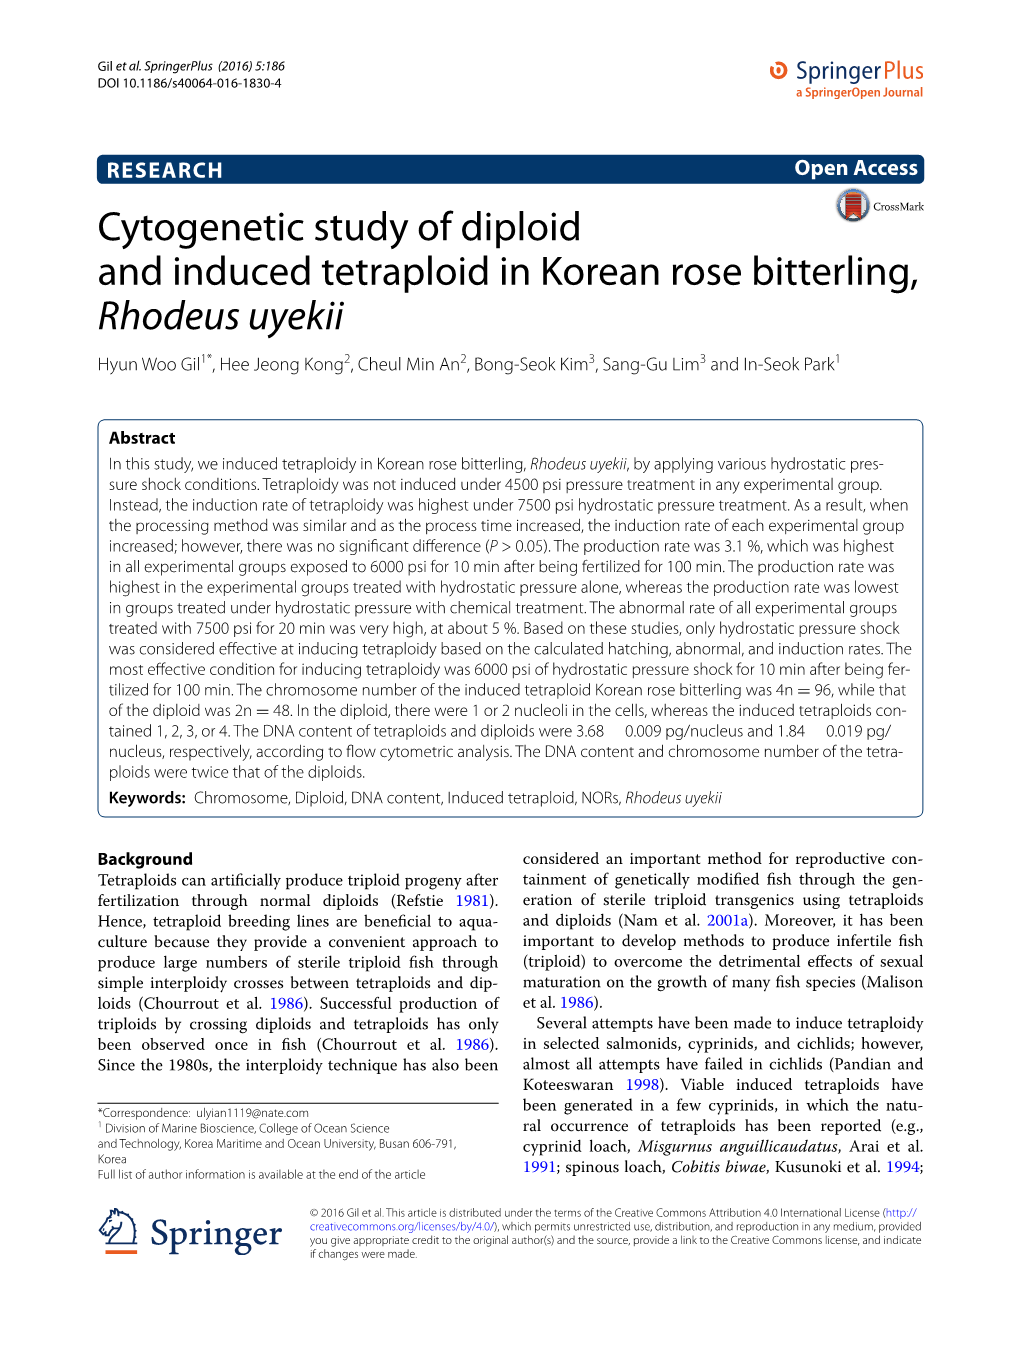 Cytogenetic Study of Diploid and Induced Tetraploid in Korean Rose Bitterling, Rhodeus Uyekii